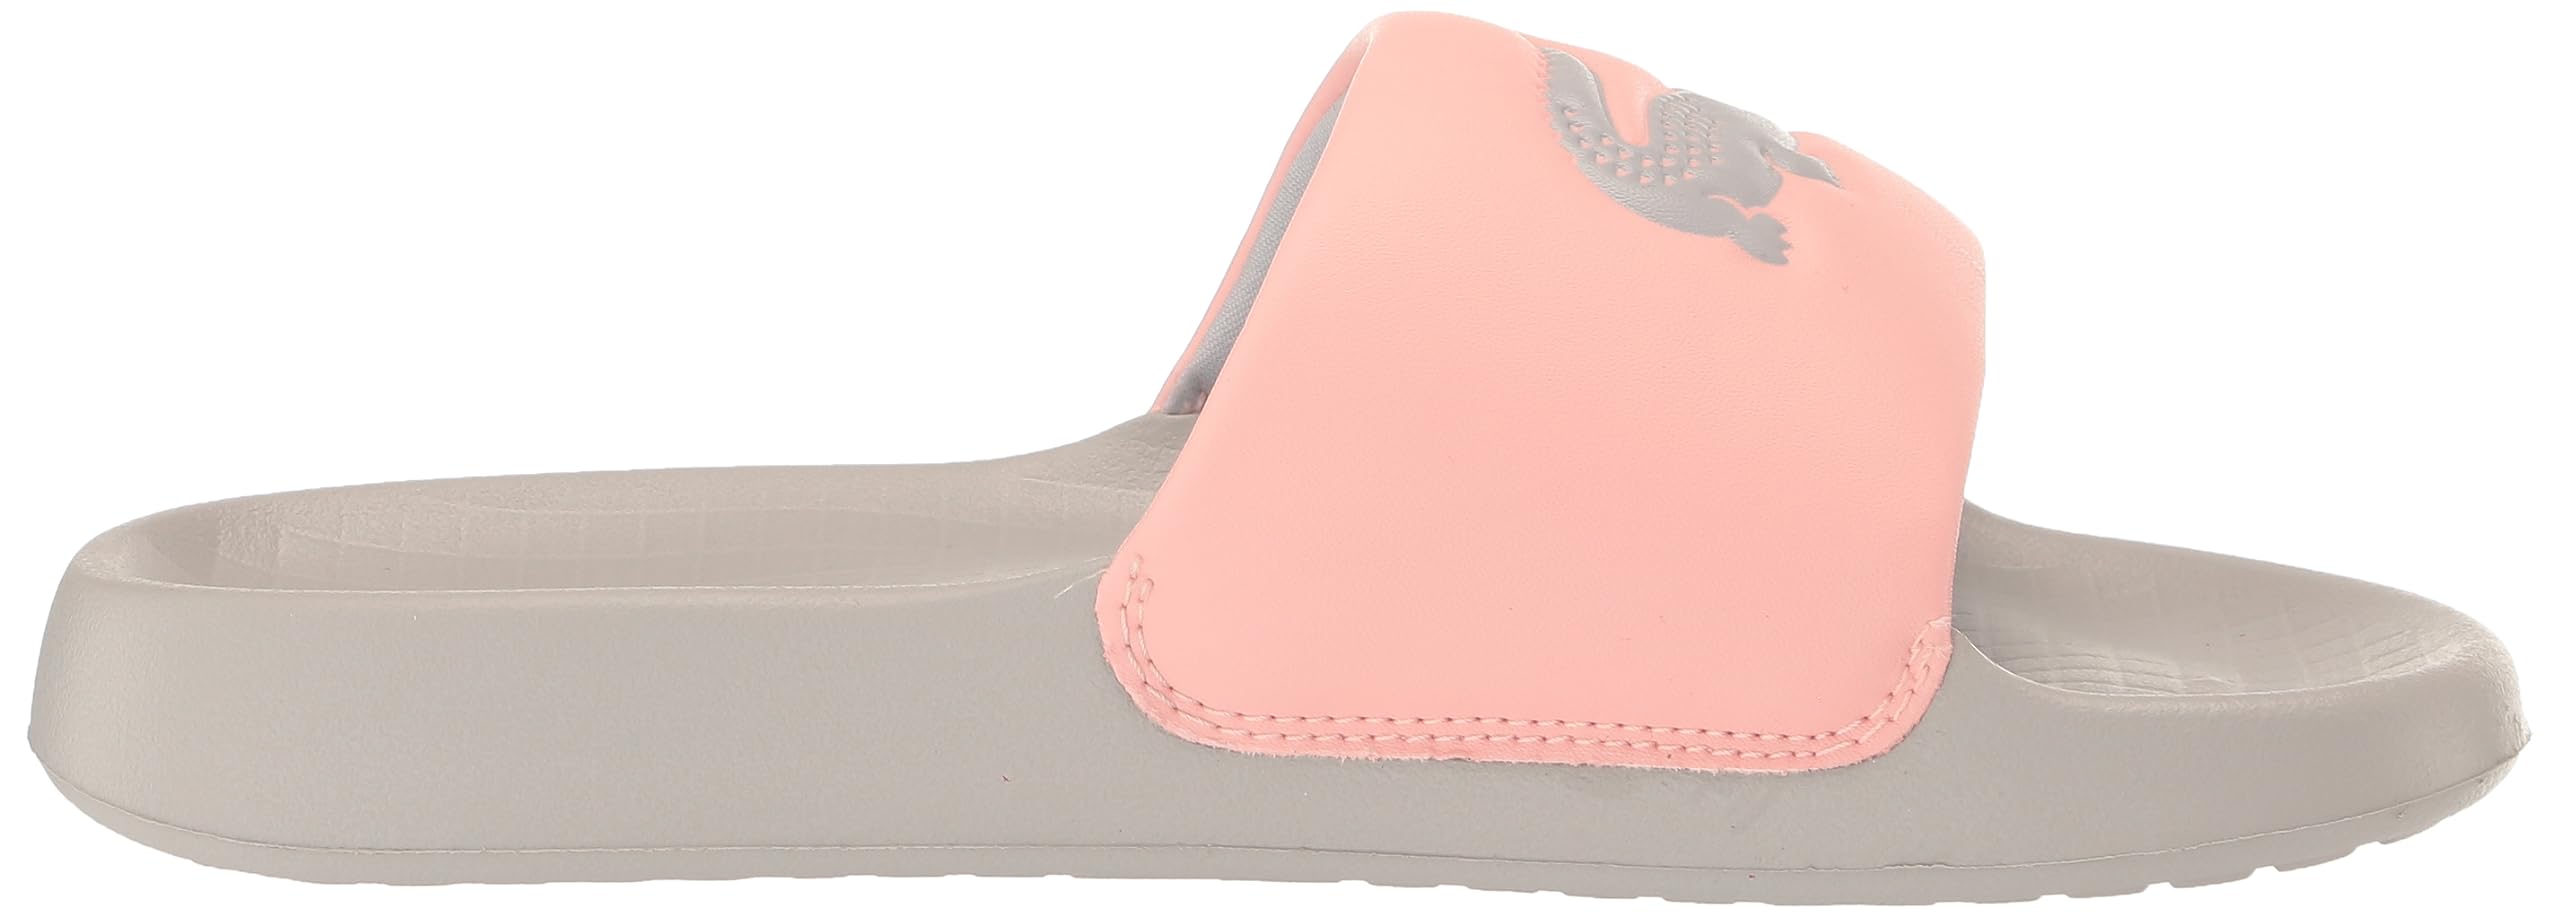 Lacoste Women's Serve Slide 1.0 Sandal